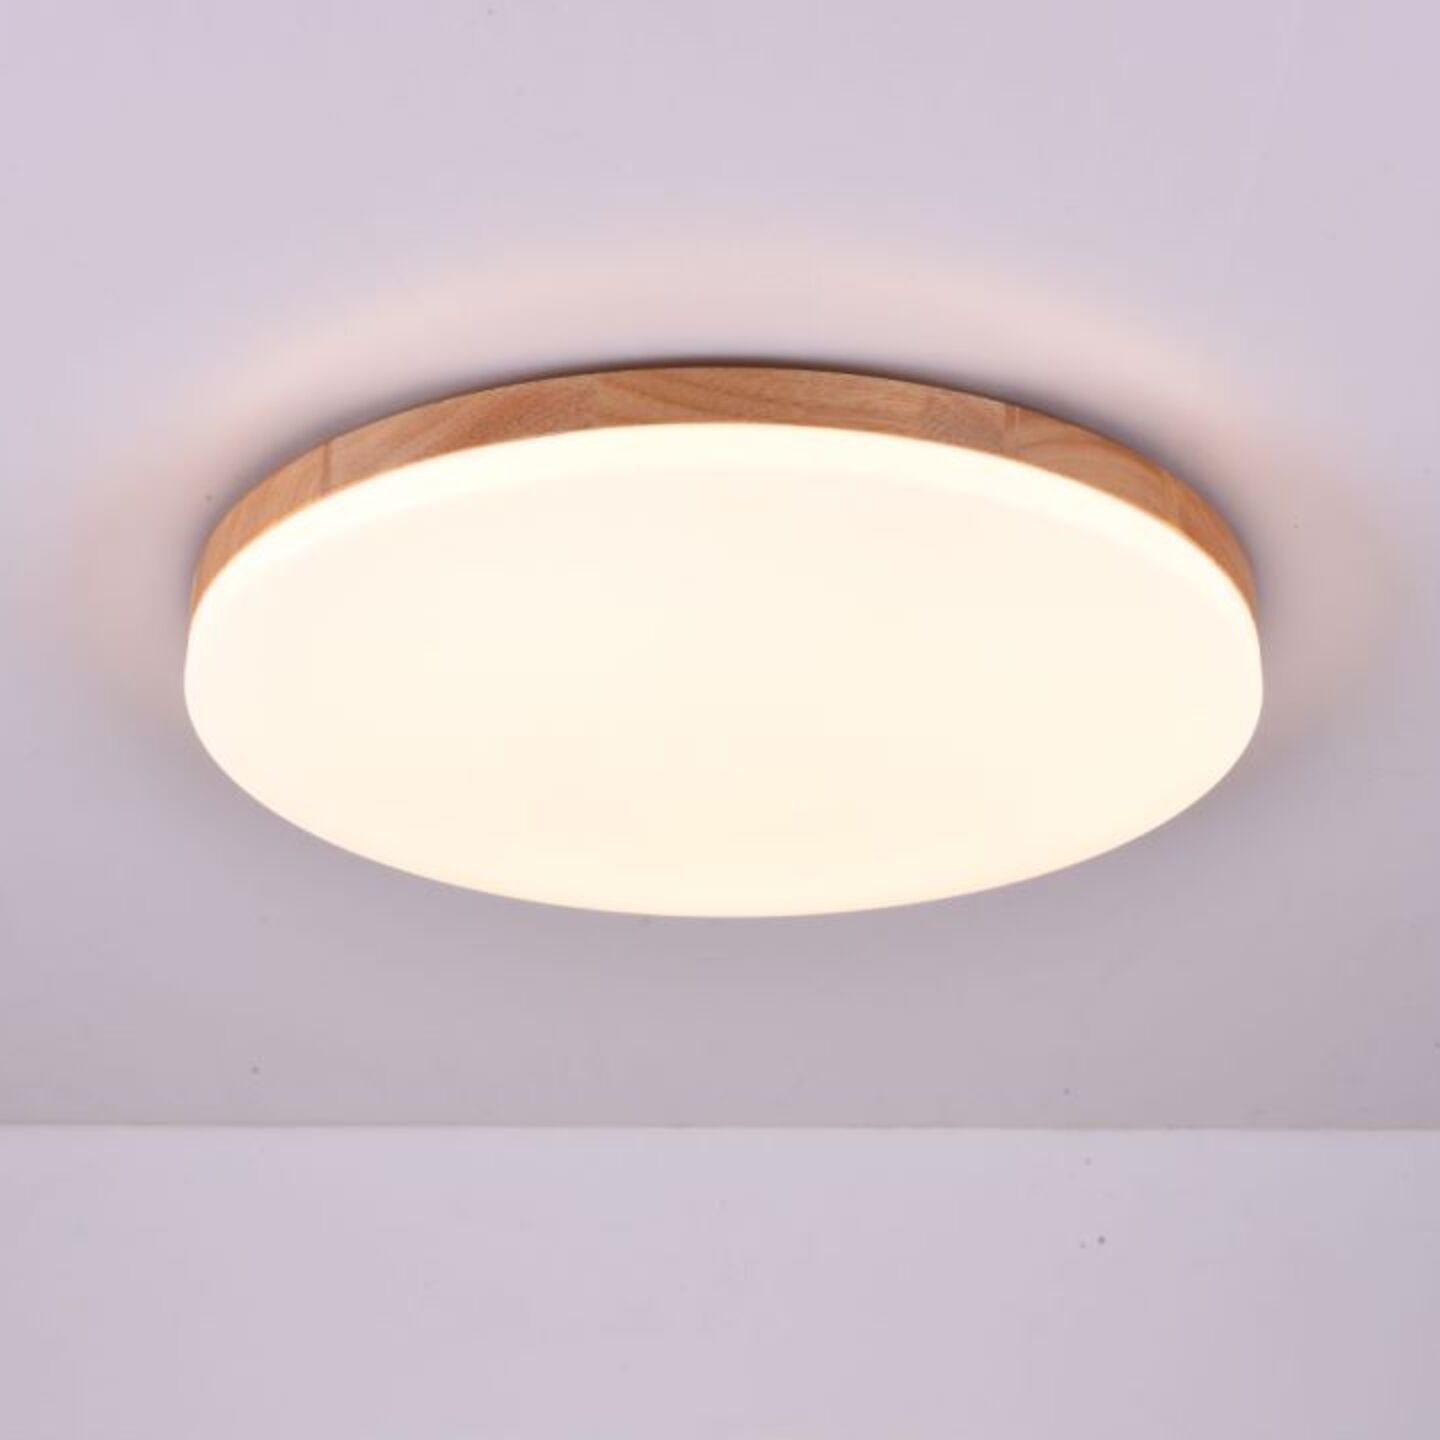 Back Wood Round Ceiling Light